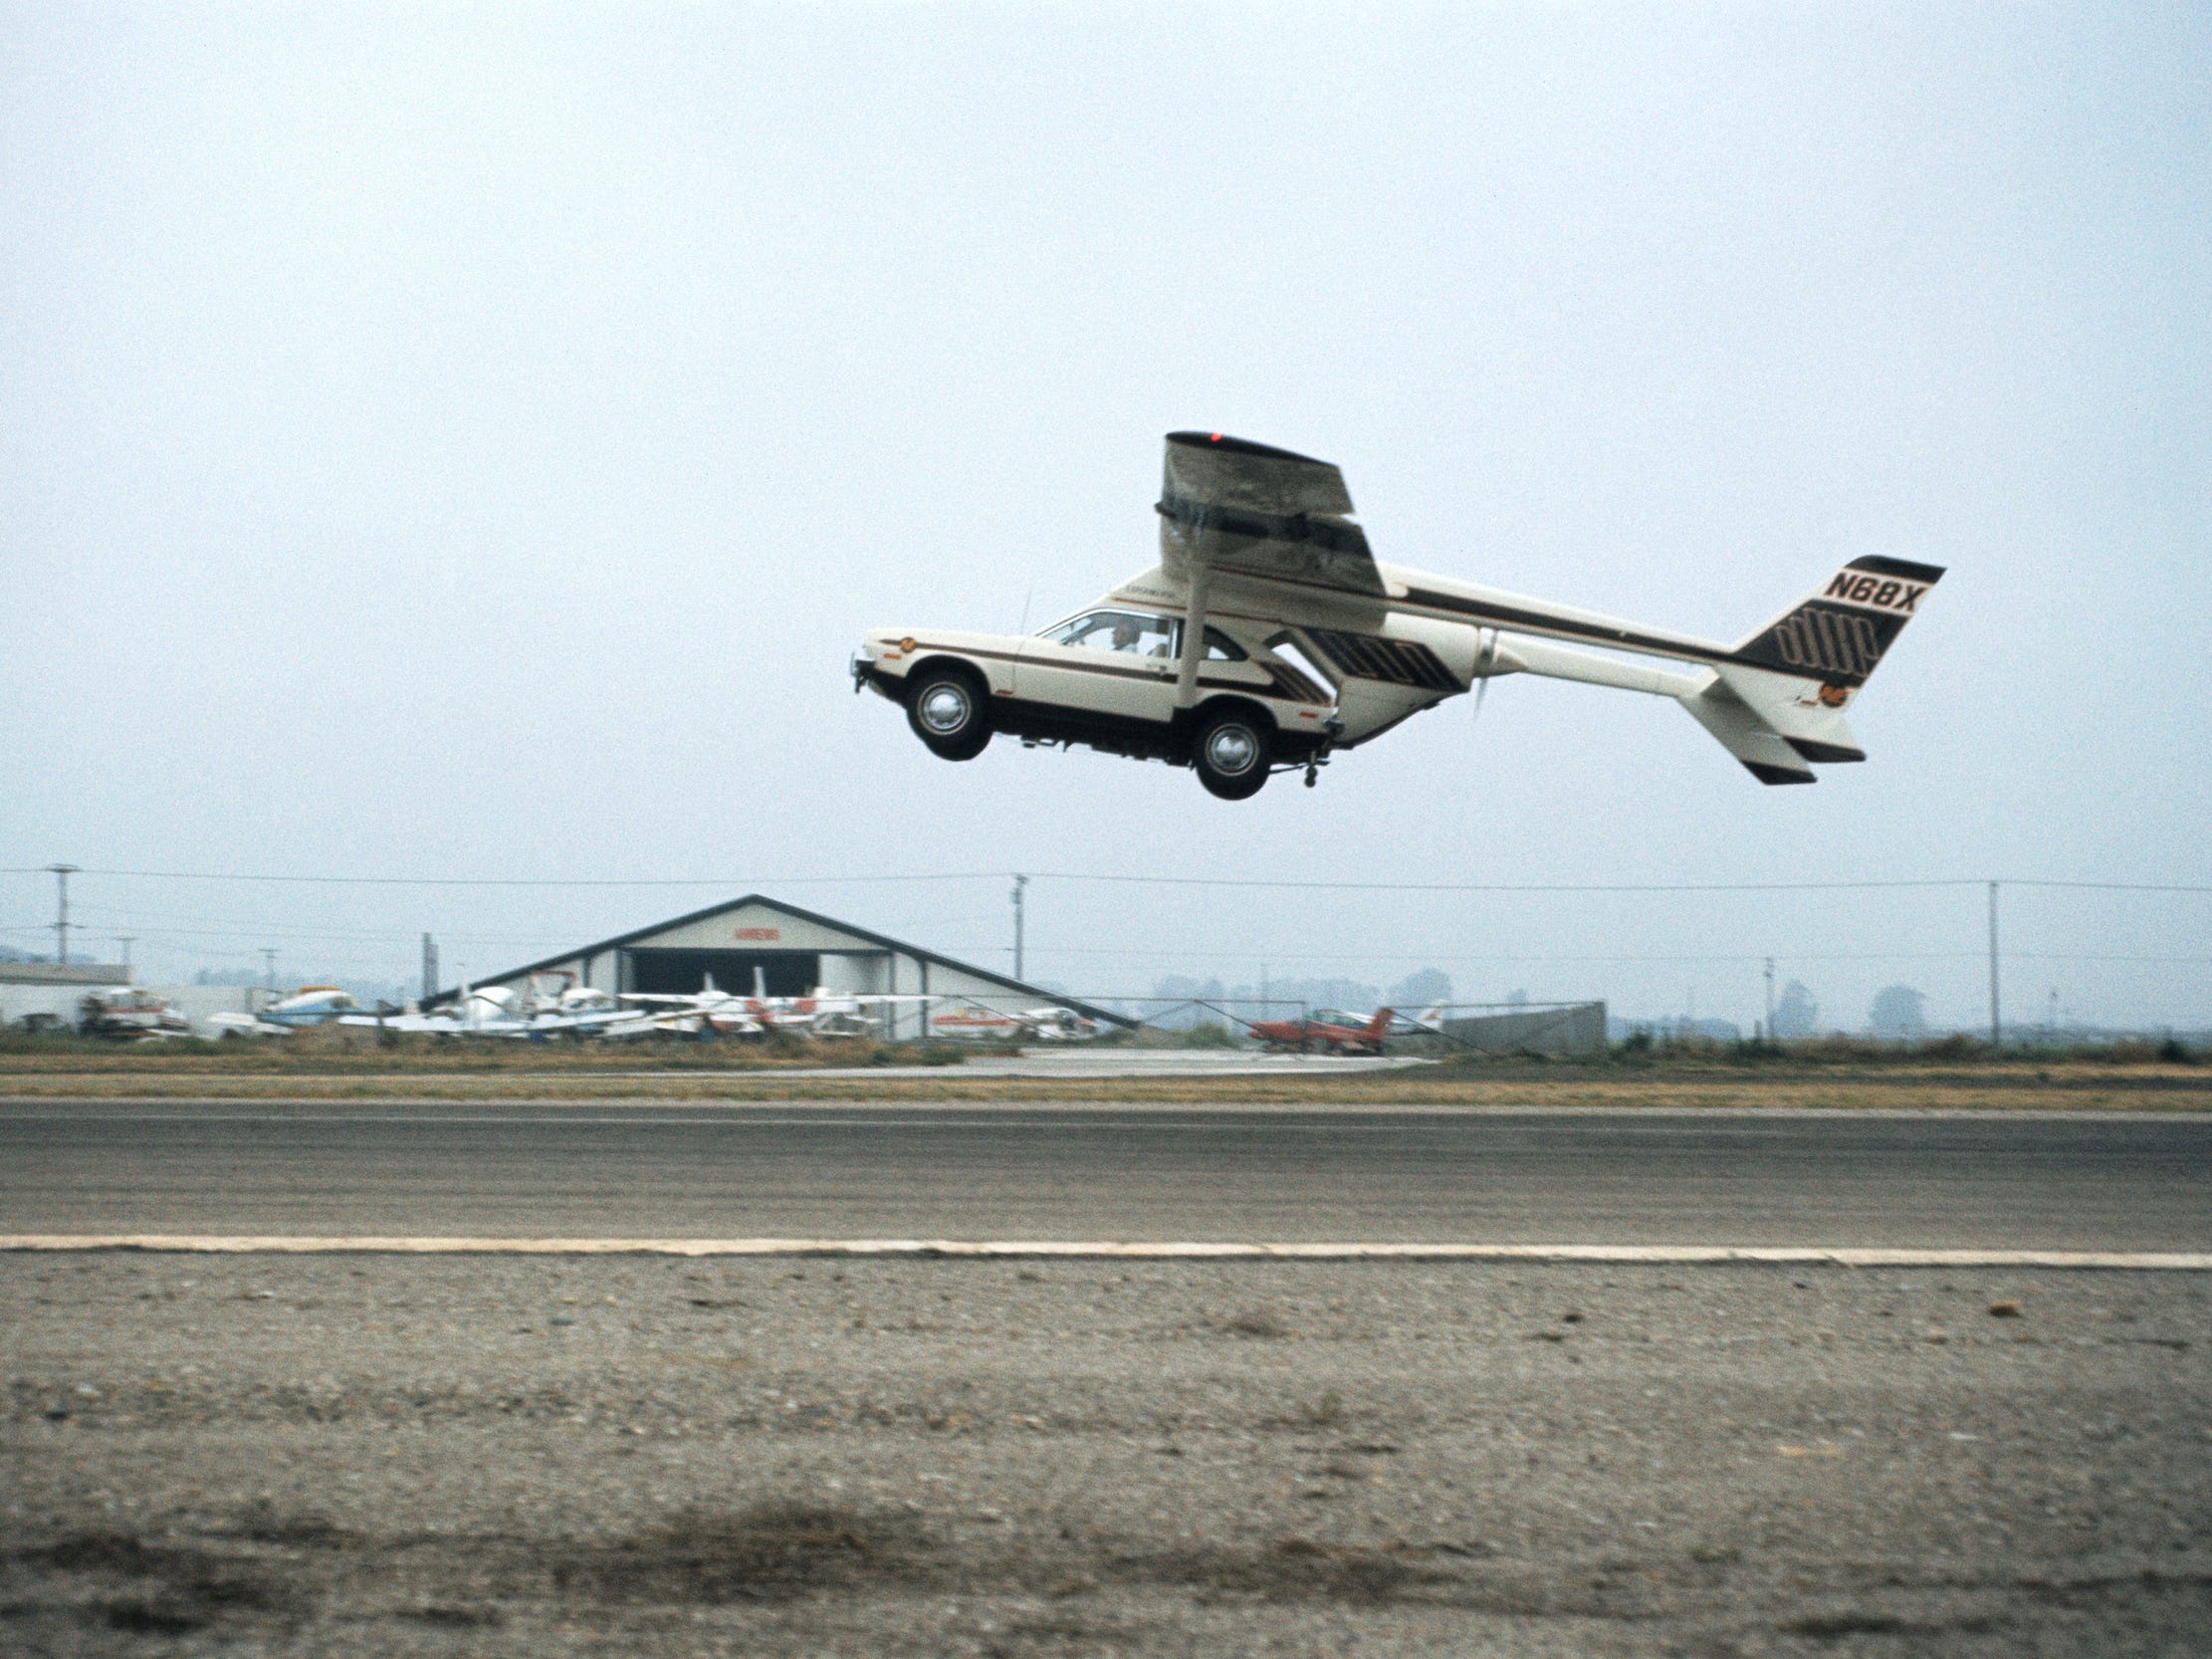 The AVE Mizar taking flight on an airport runway